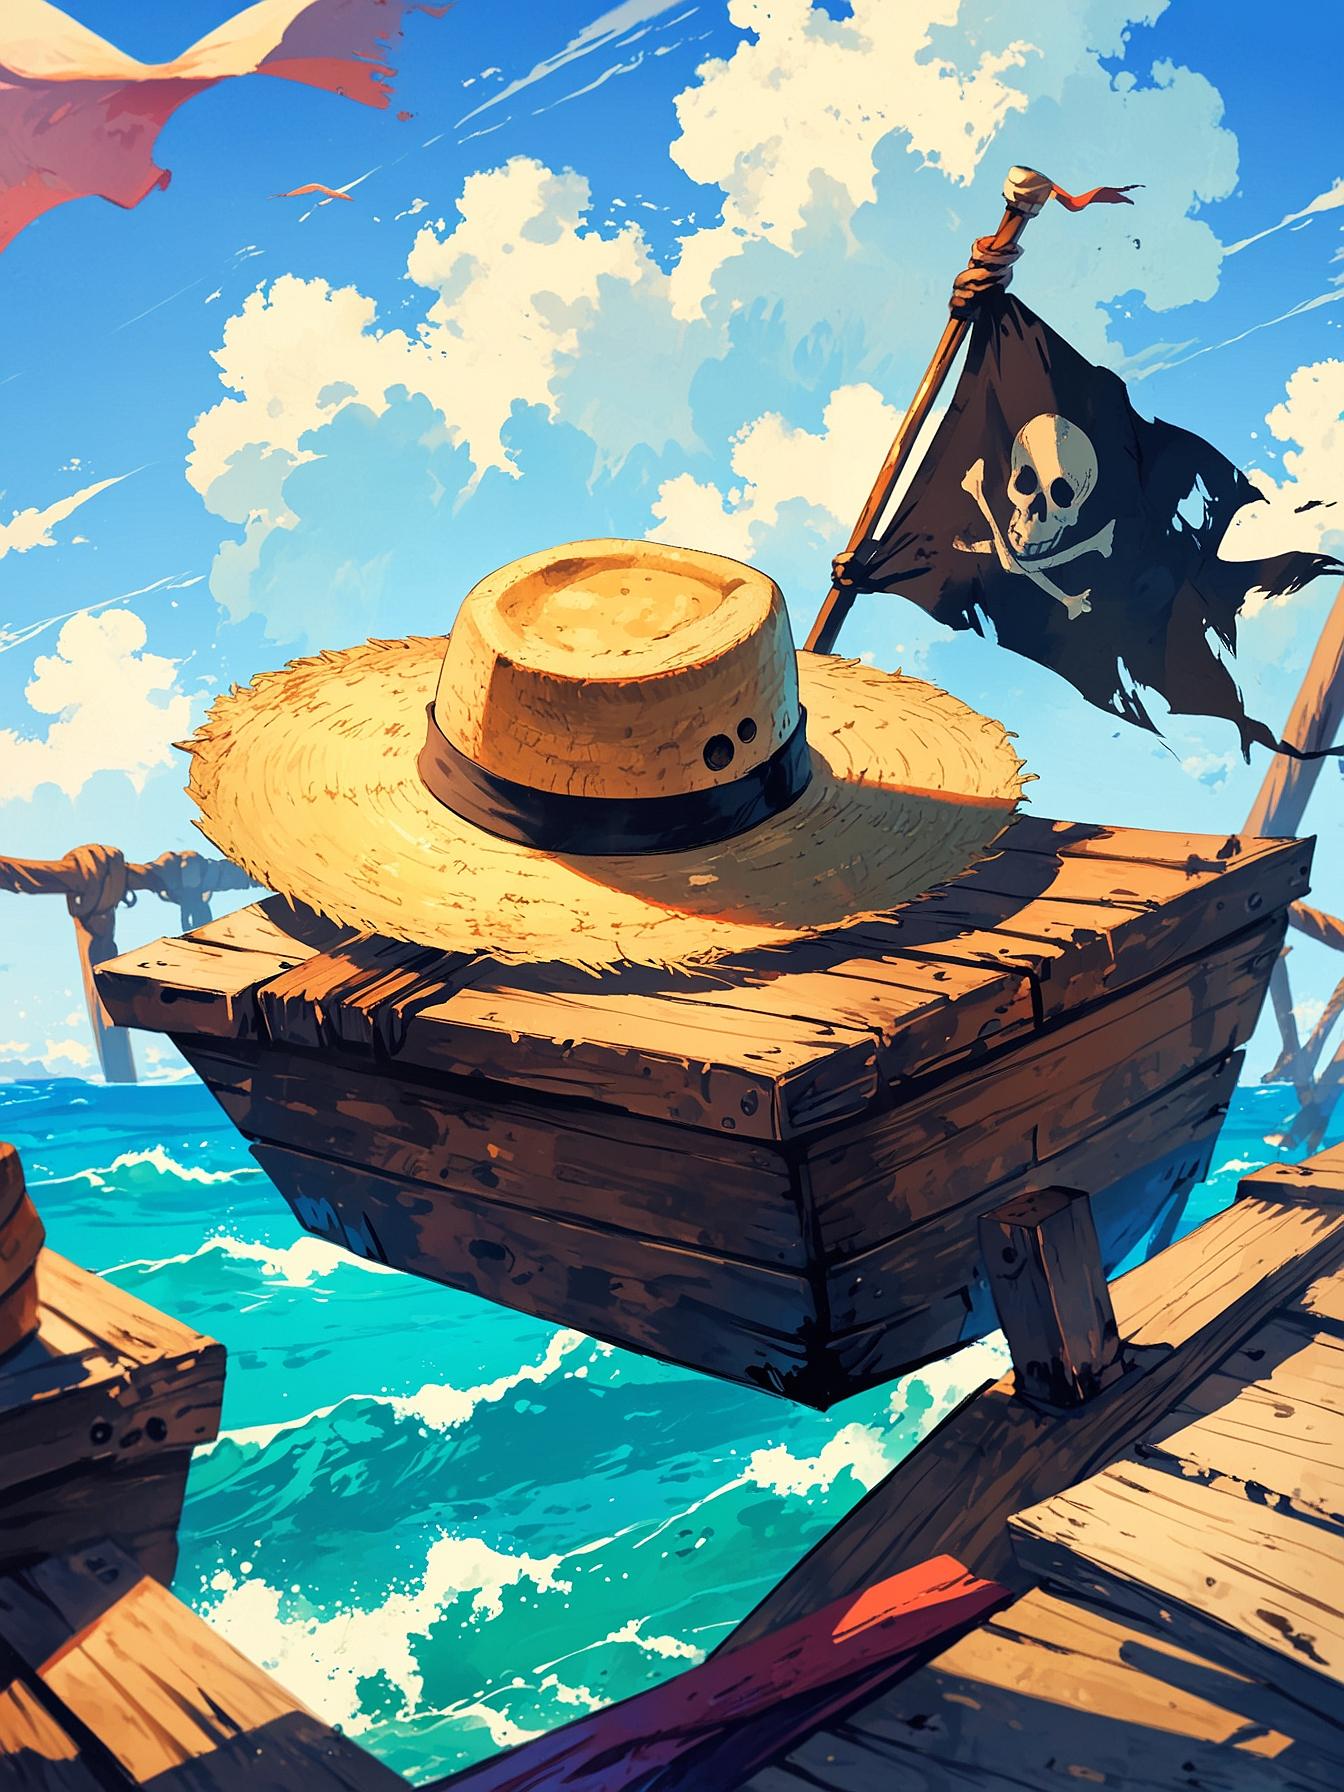 Straw hat on a wooden ship deck, Jolly Roger flag, ocean horizon, clear blue sky